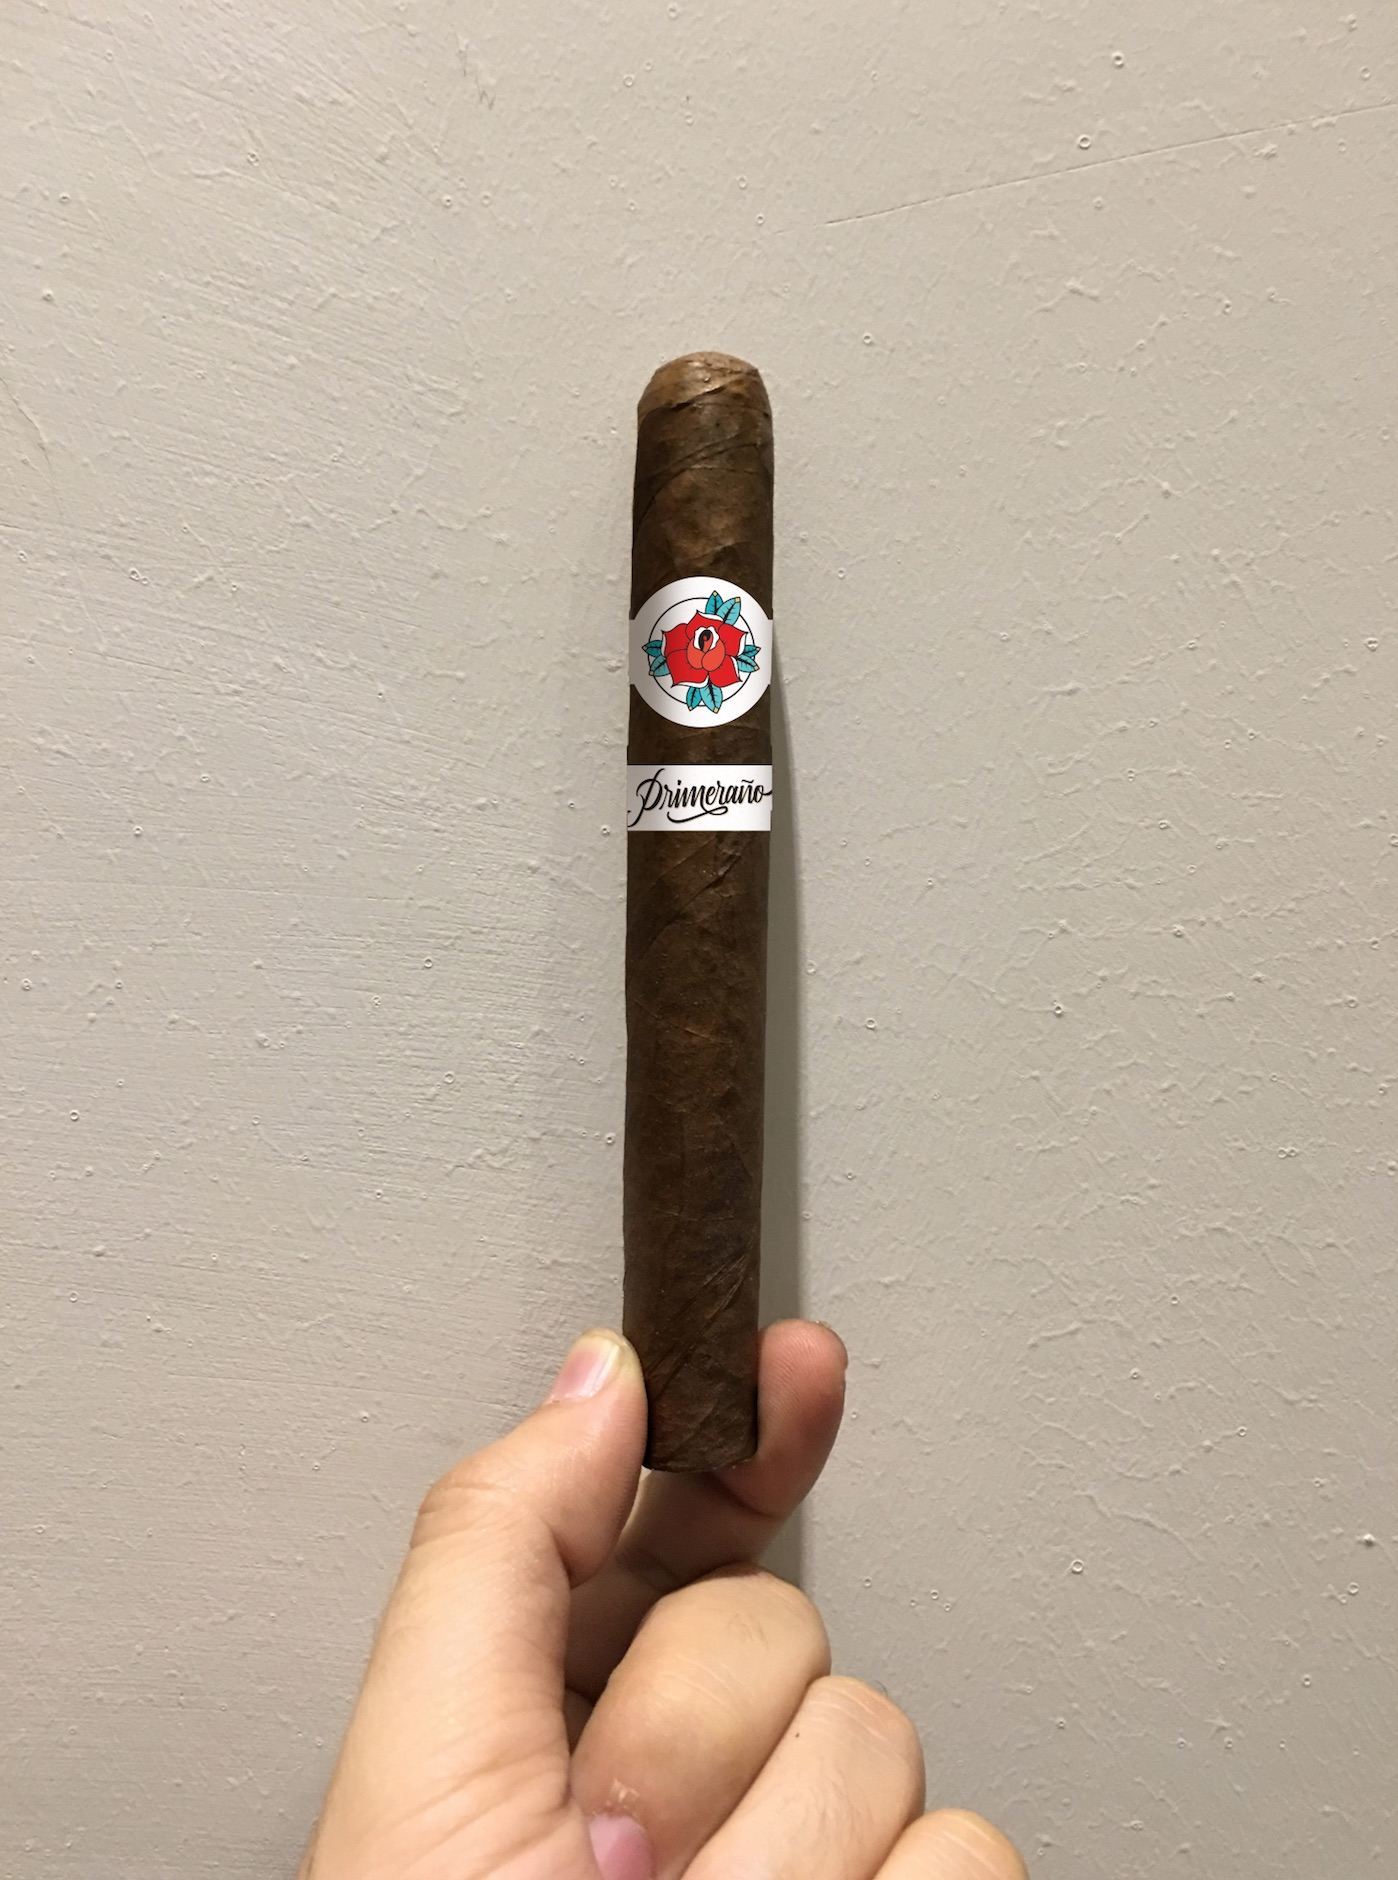 Chogui Primerano cigar